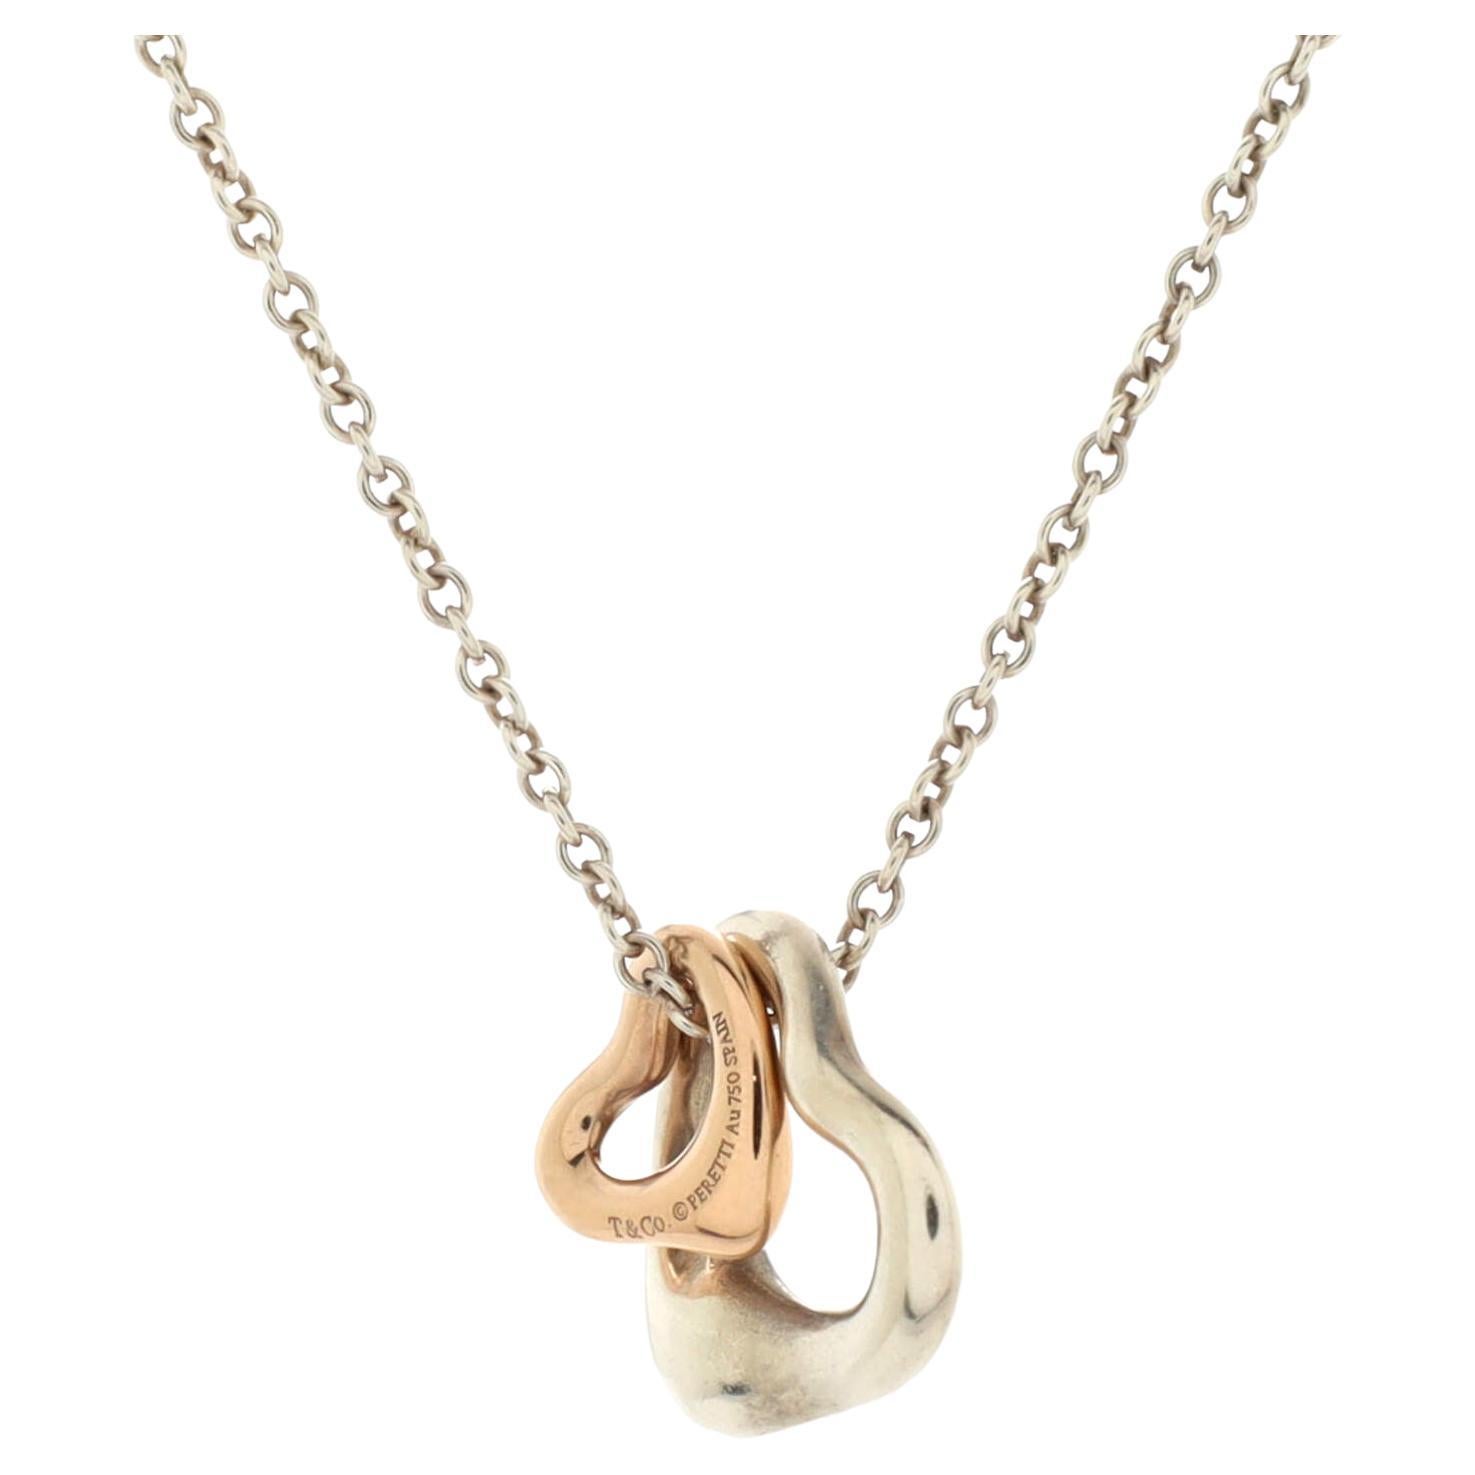 Tiffany & Co. Elsa Peretti Double Open Heart Pendant Necklace Sterling Silver